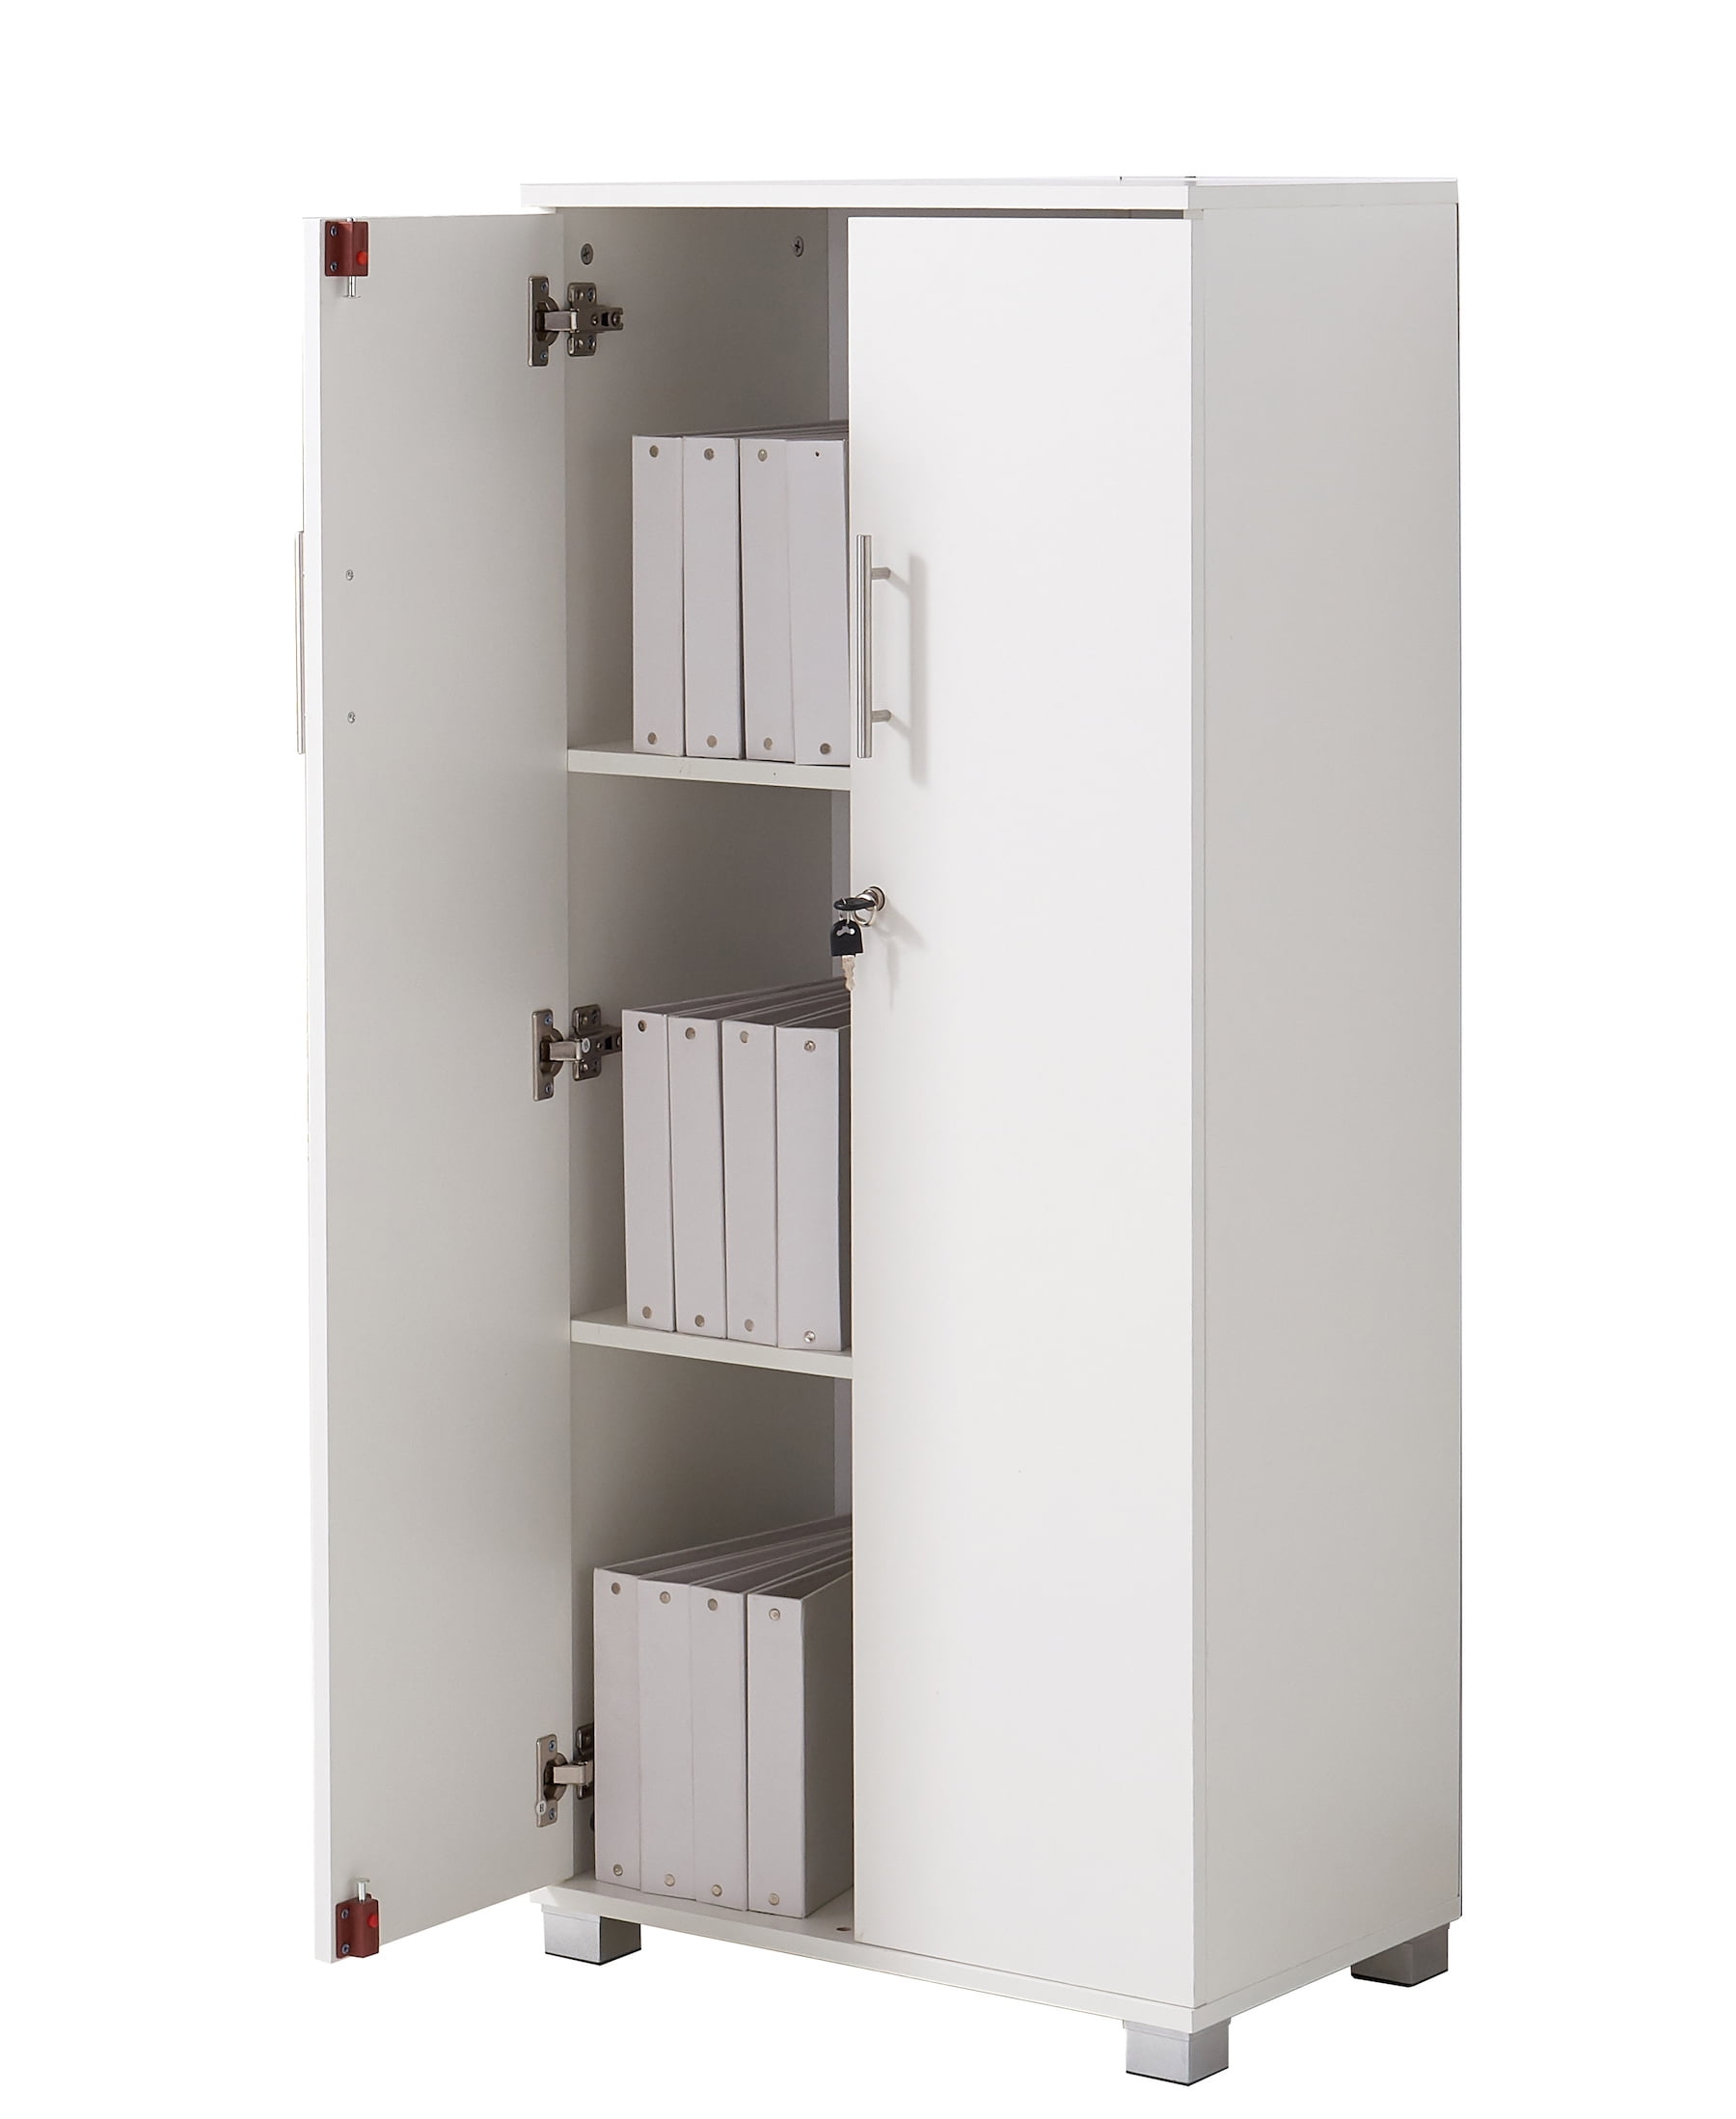 MMT White Storage Cupboard 2 Door Locking Bookcase Shelving Filing Cabinet 